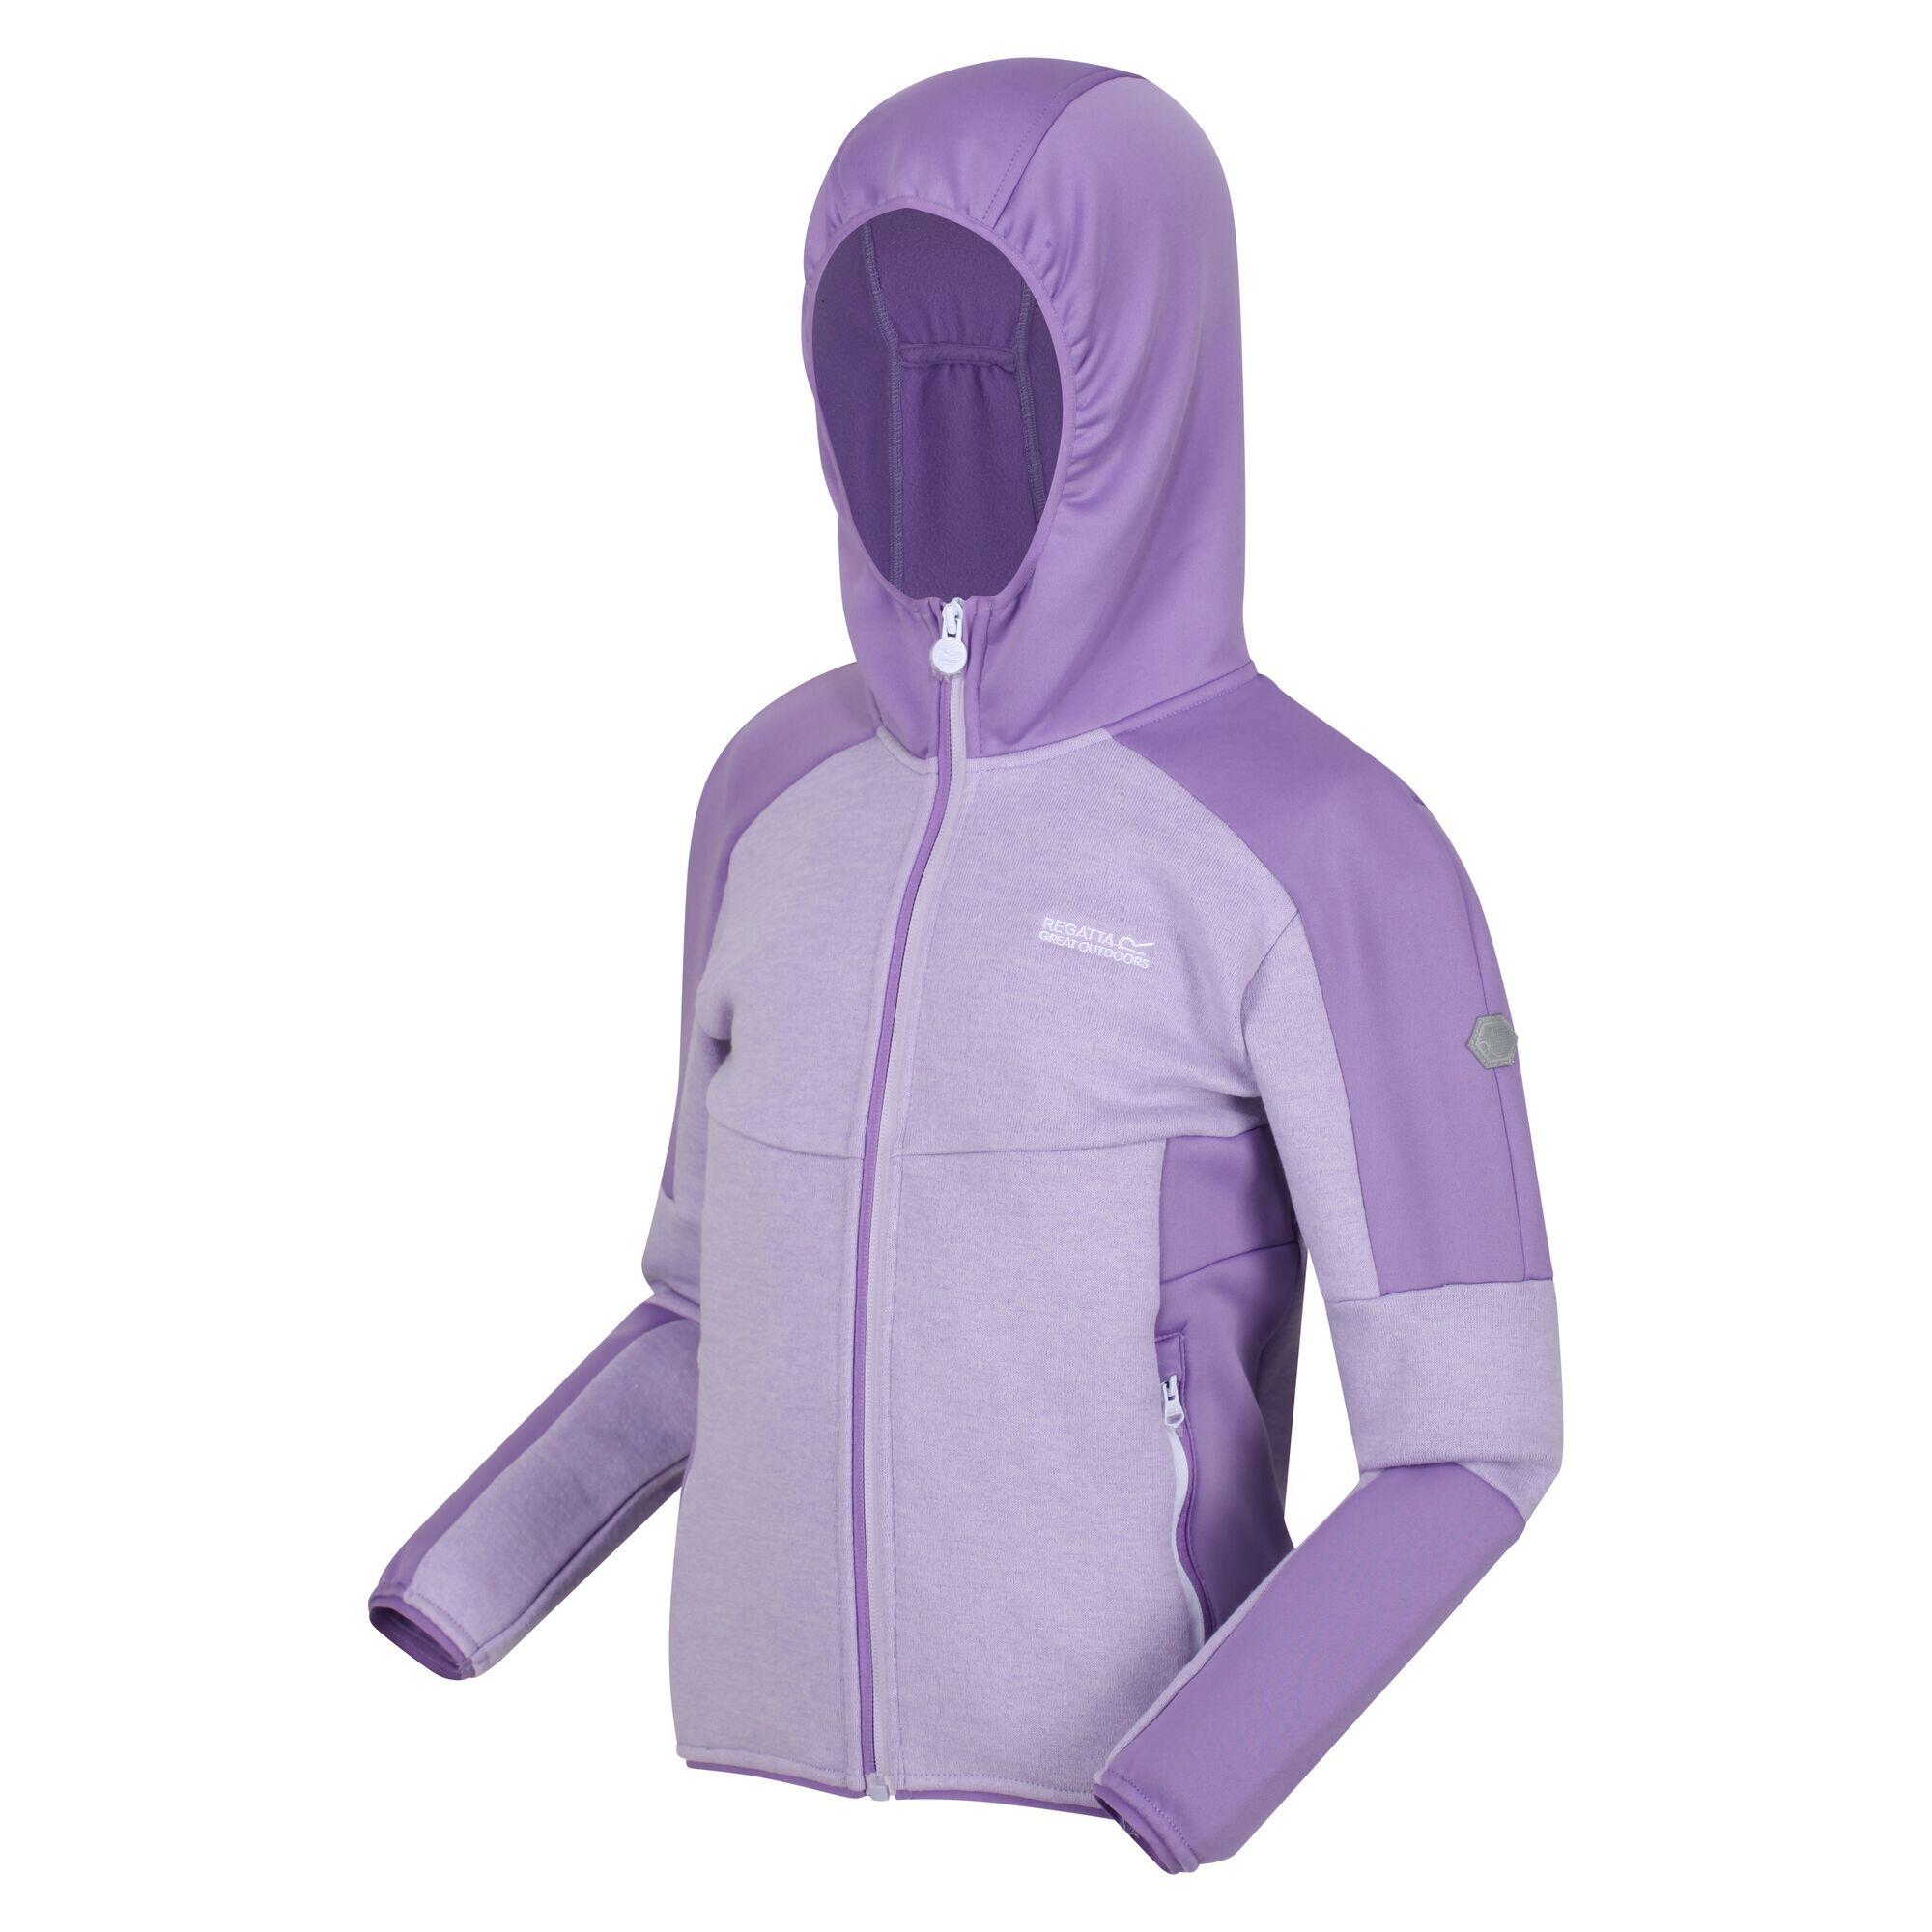 Childrens/Kids Dissolver V Full Zip Fleece Jacket (Pastel Lilac/Light Amethyst) 4/5